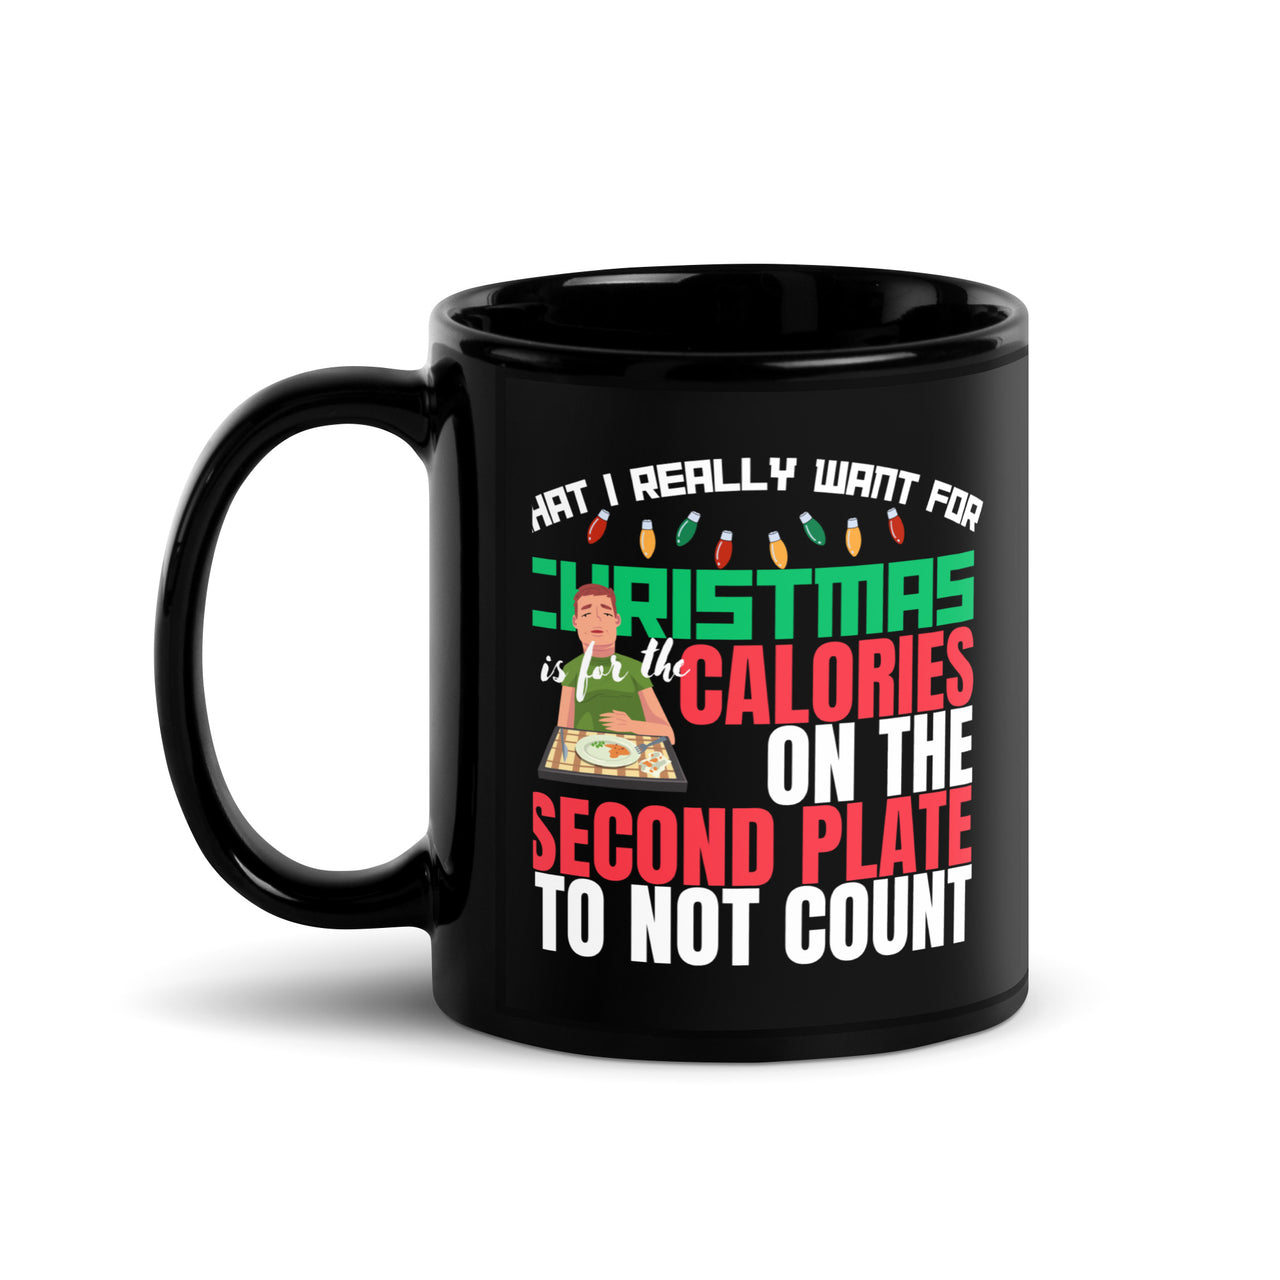 Calorie-Free Christmas Second Plate Black Mug